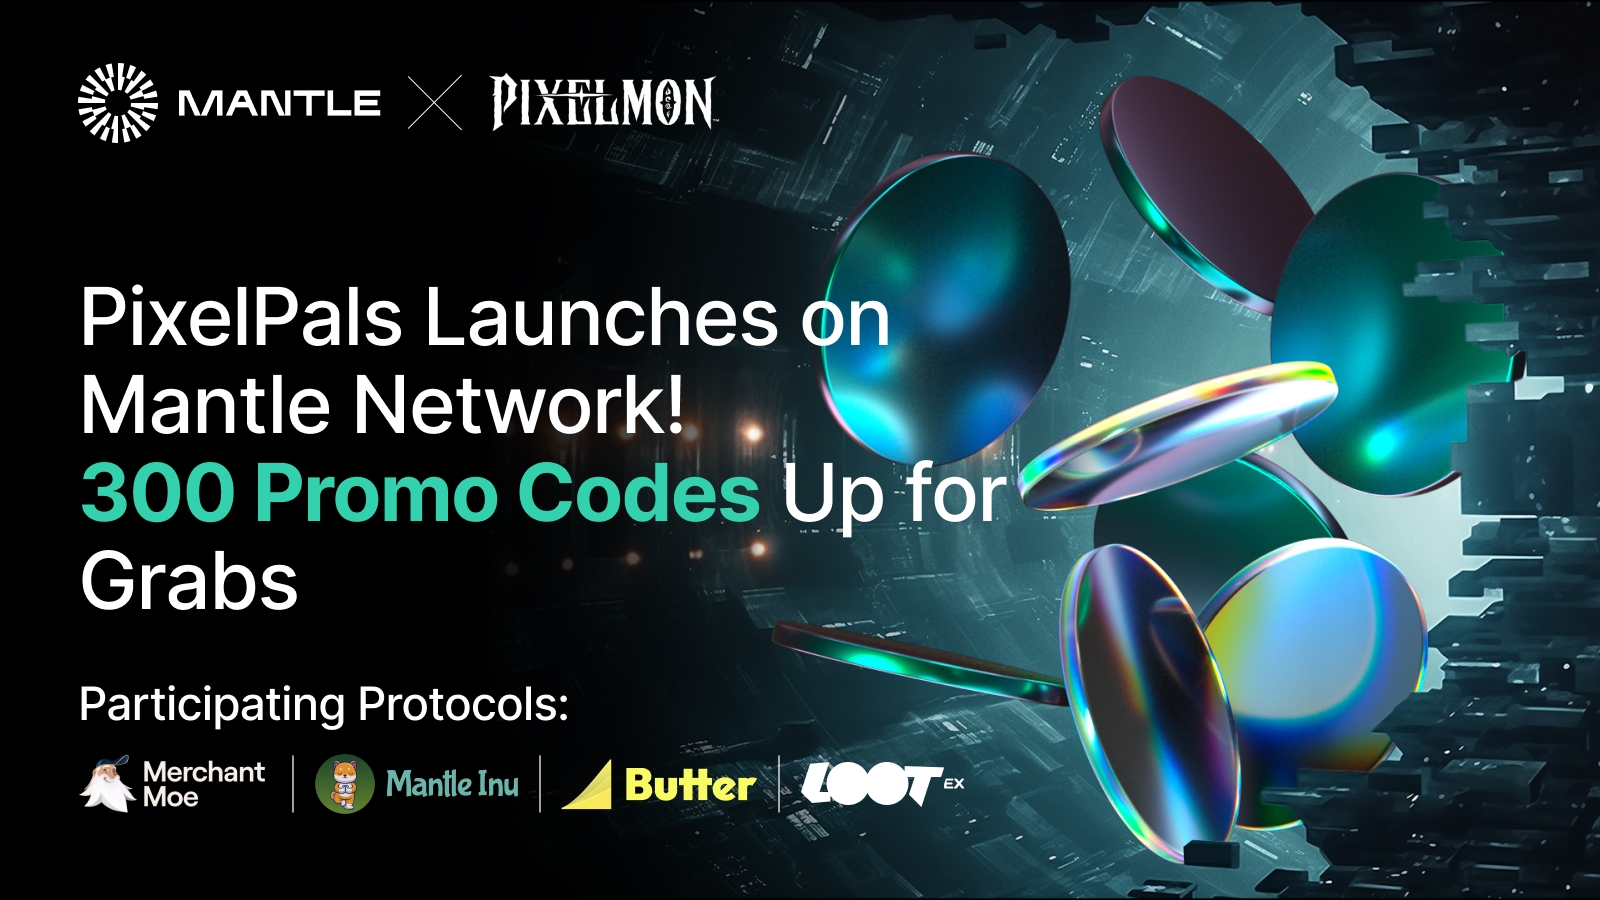 Mantle's PixelPals: 300 Promo Codes for PixelPals Up for Grabs!